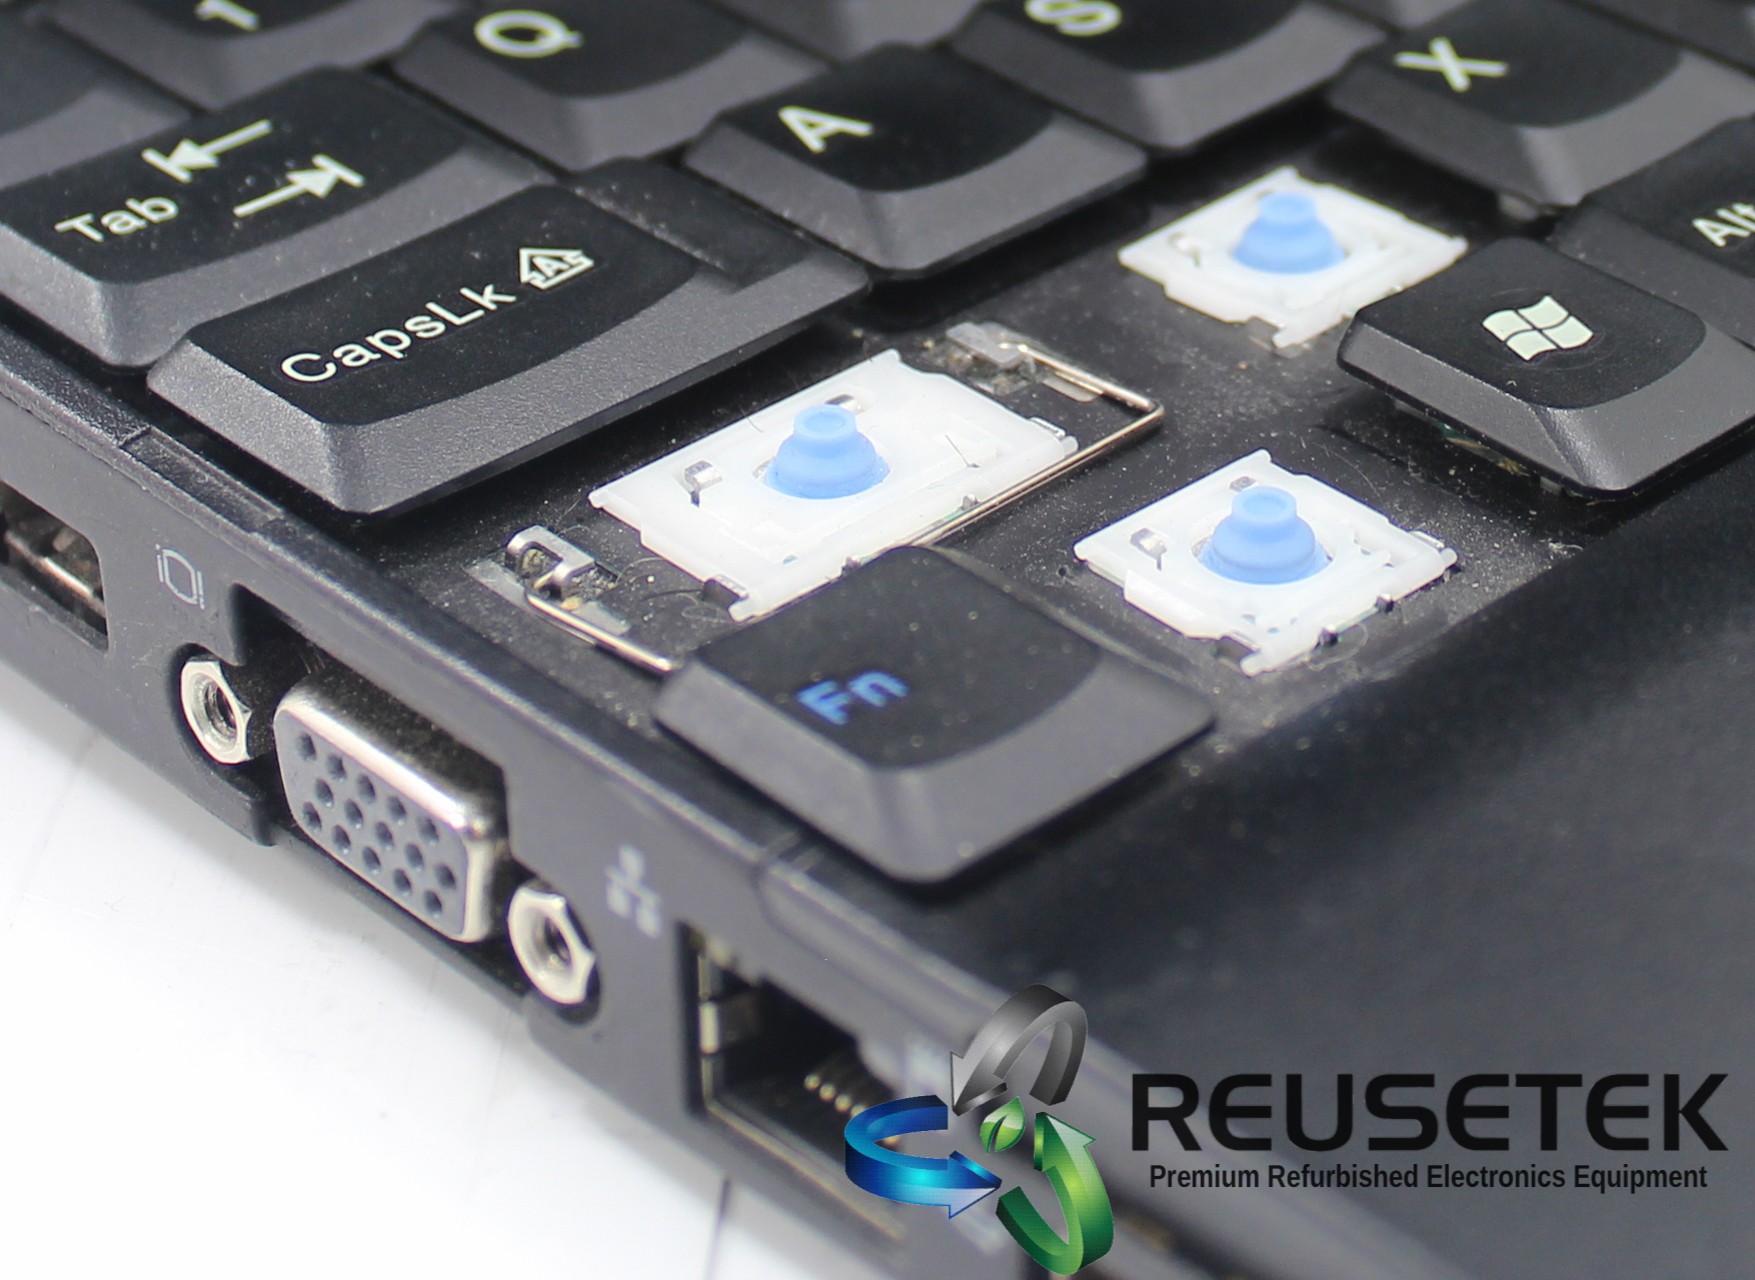 CDH5043-Lenovo X201 Type 3249-EPU 12.1" Notebook Laptop (No Battery)  -image